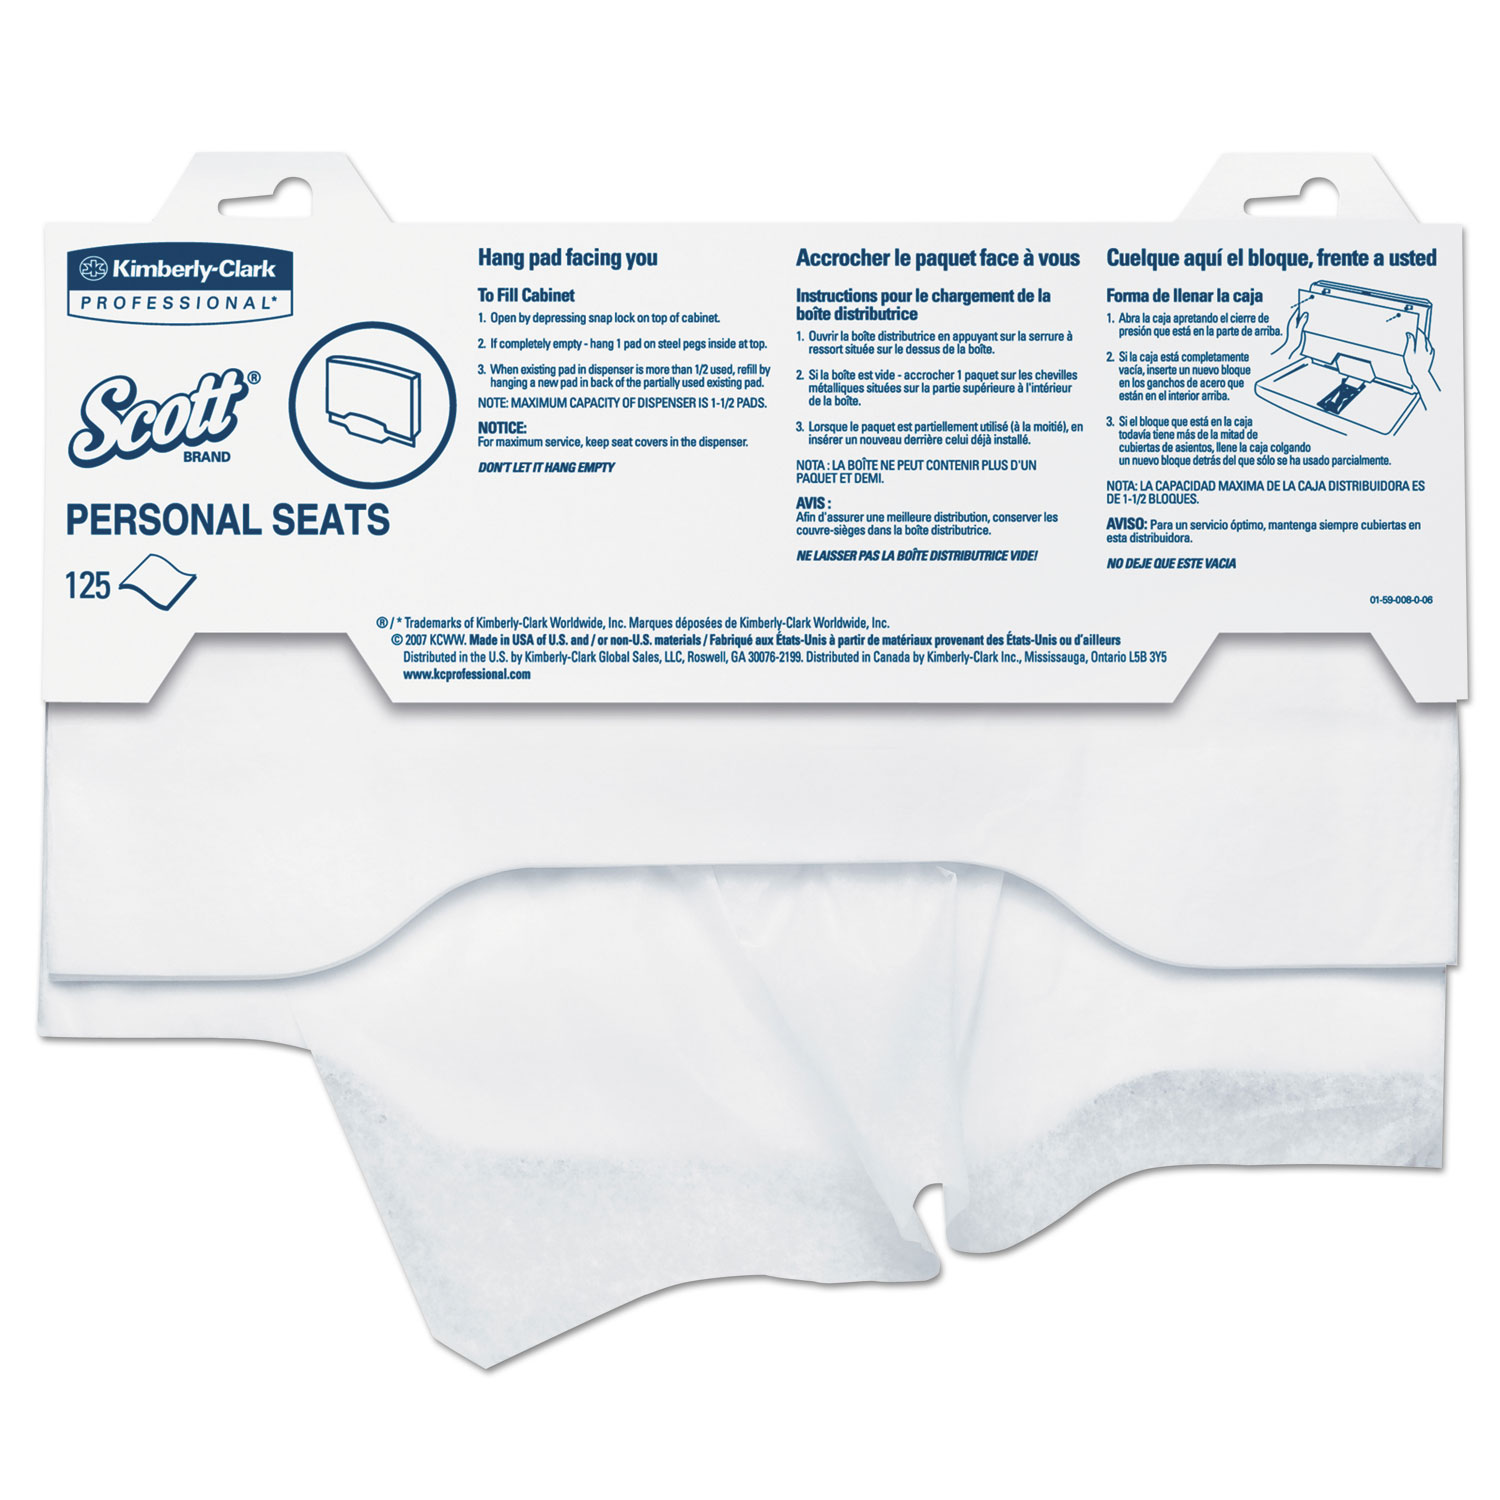  Scott 7410 Personal Seats Sanitary Toilet Seat Covers, 15 x 18, 125/Pack (KCC07410PK) 